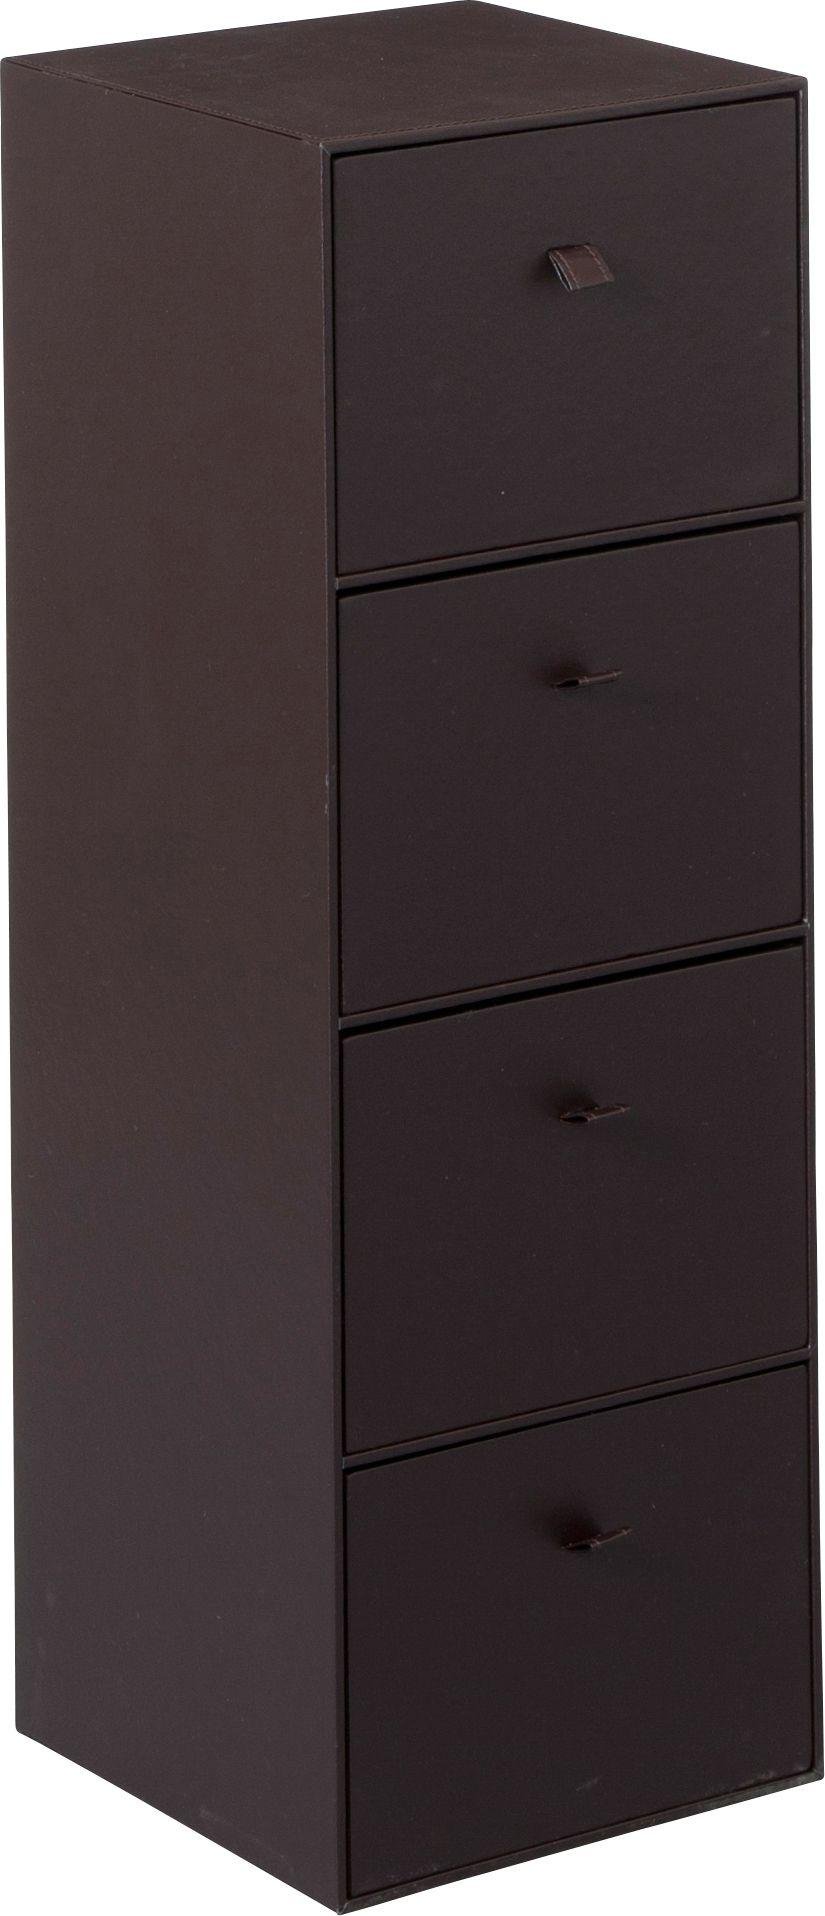 Argos Home Cd And Dvd Media Storage Cabinet Dark Brown 9064463 Argos Price Tracker Pricehistory Co Uk